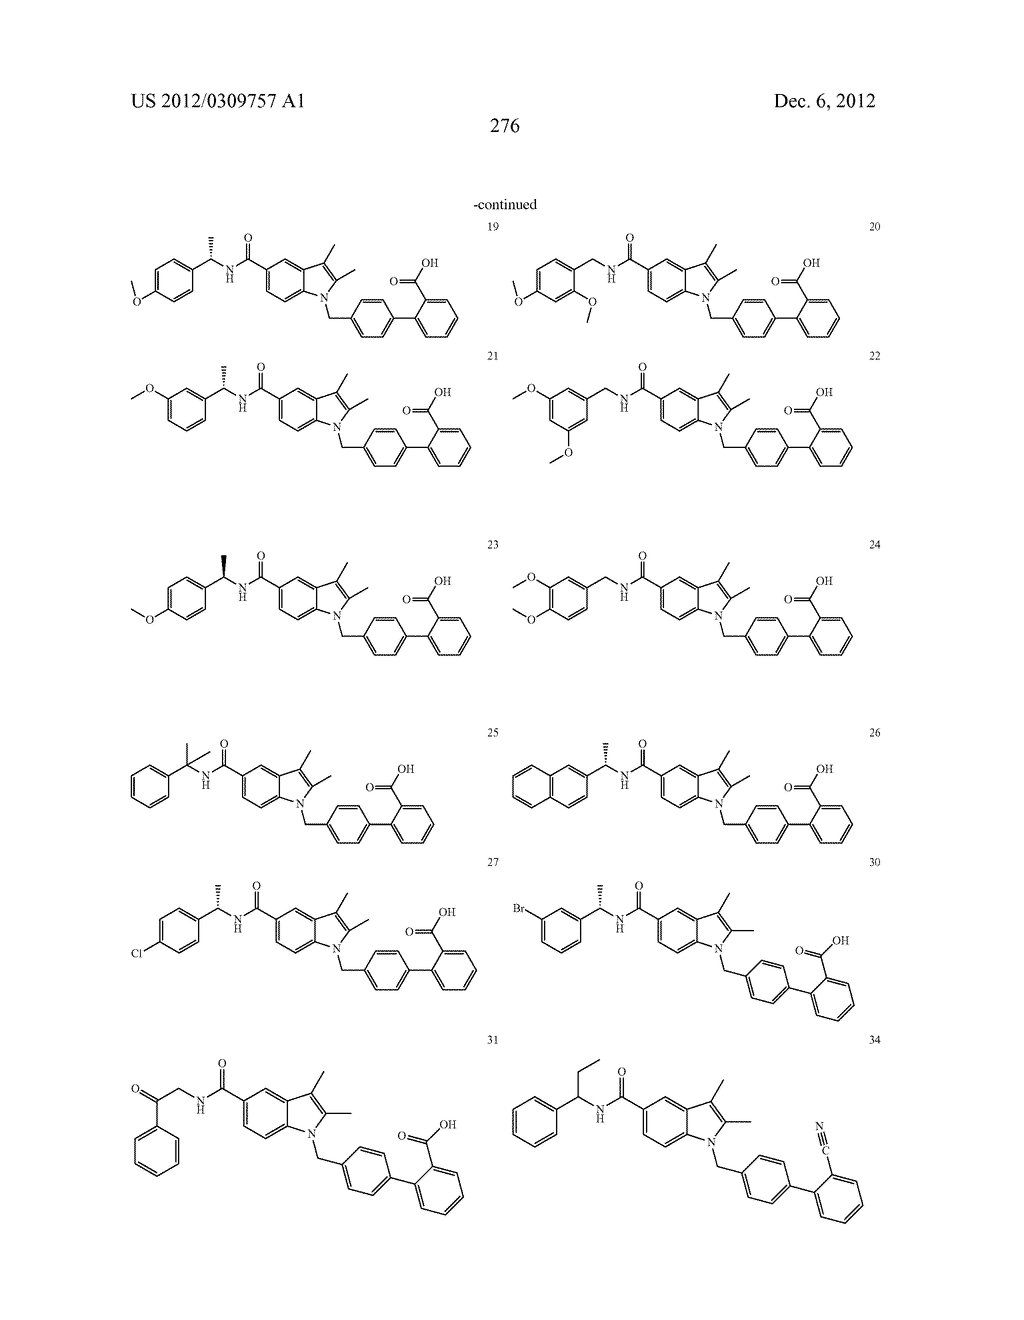 N-BIPHENYLMETHYLINDOLE MODULATORS OF PPARG - diagram, schematic, and image 291